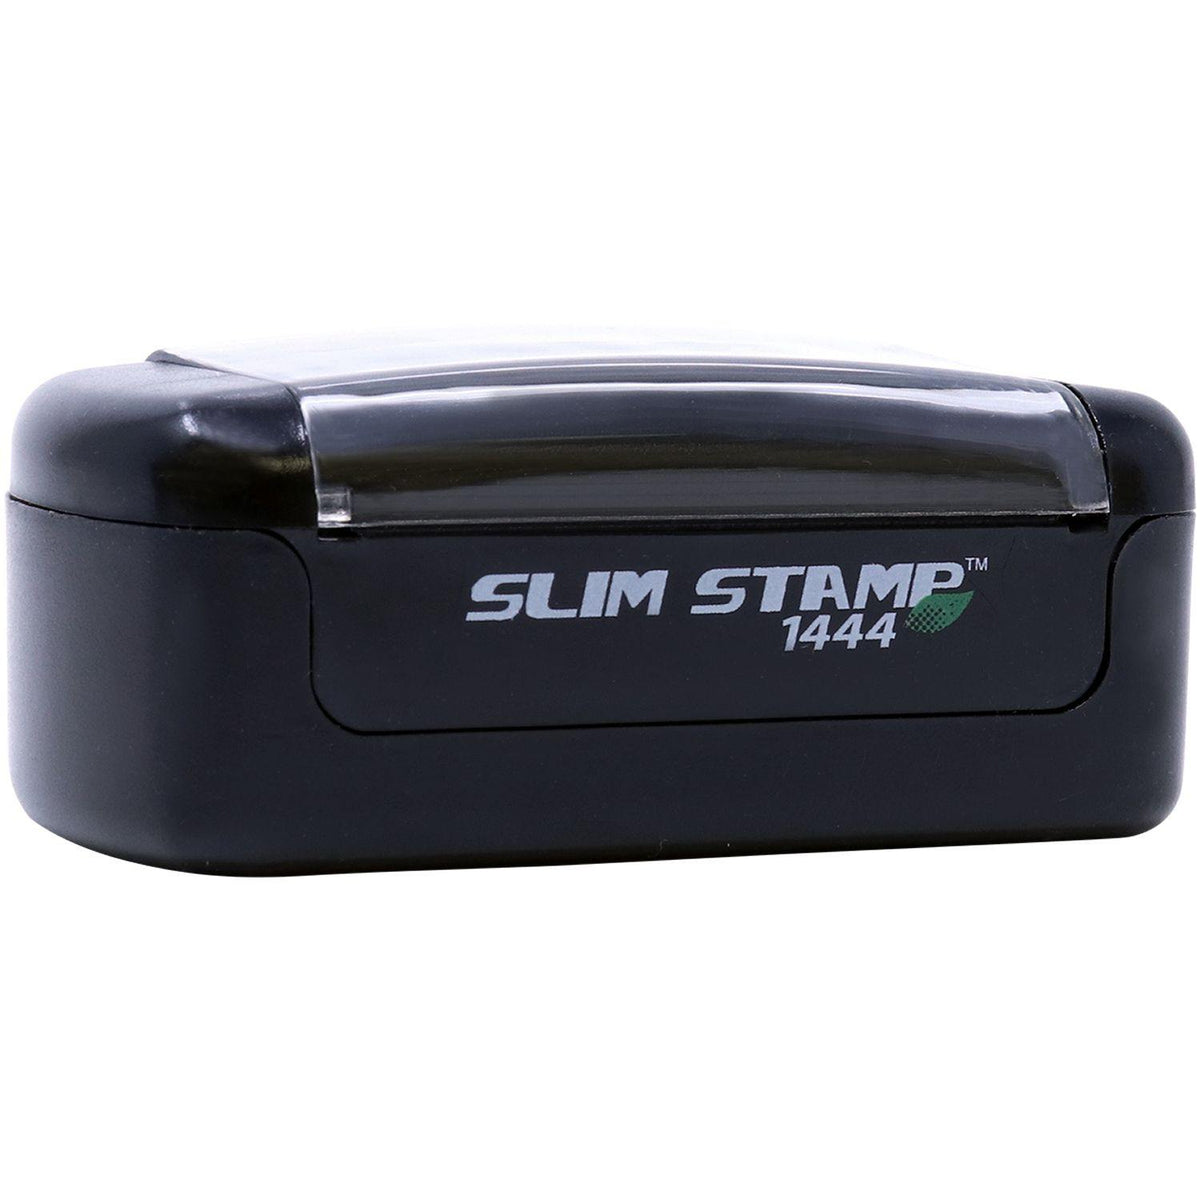 Alt View of Slim Pre-Inked Deceased Stamp Front View